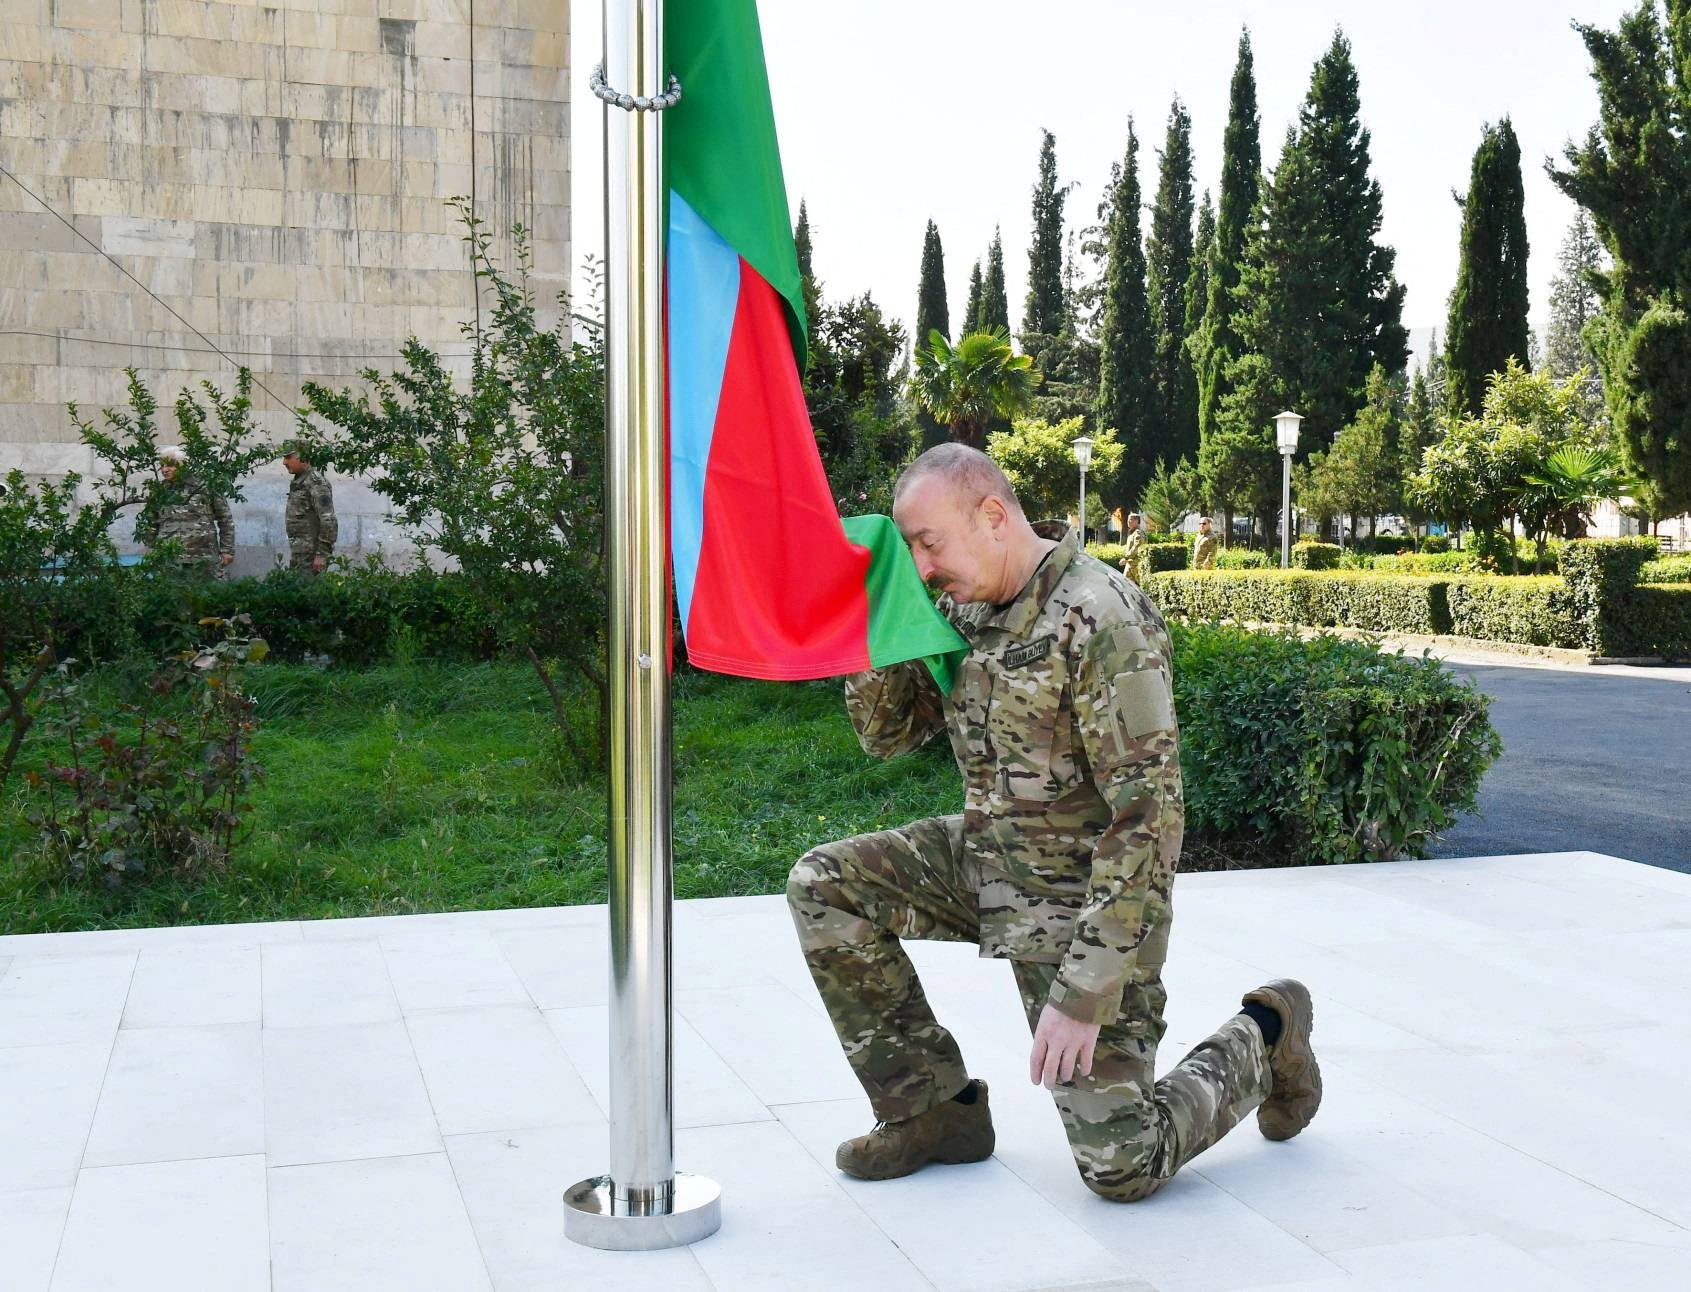 Azerbaijan's President Ilham Aliyev visits Nagorno-Karabakh region